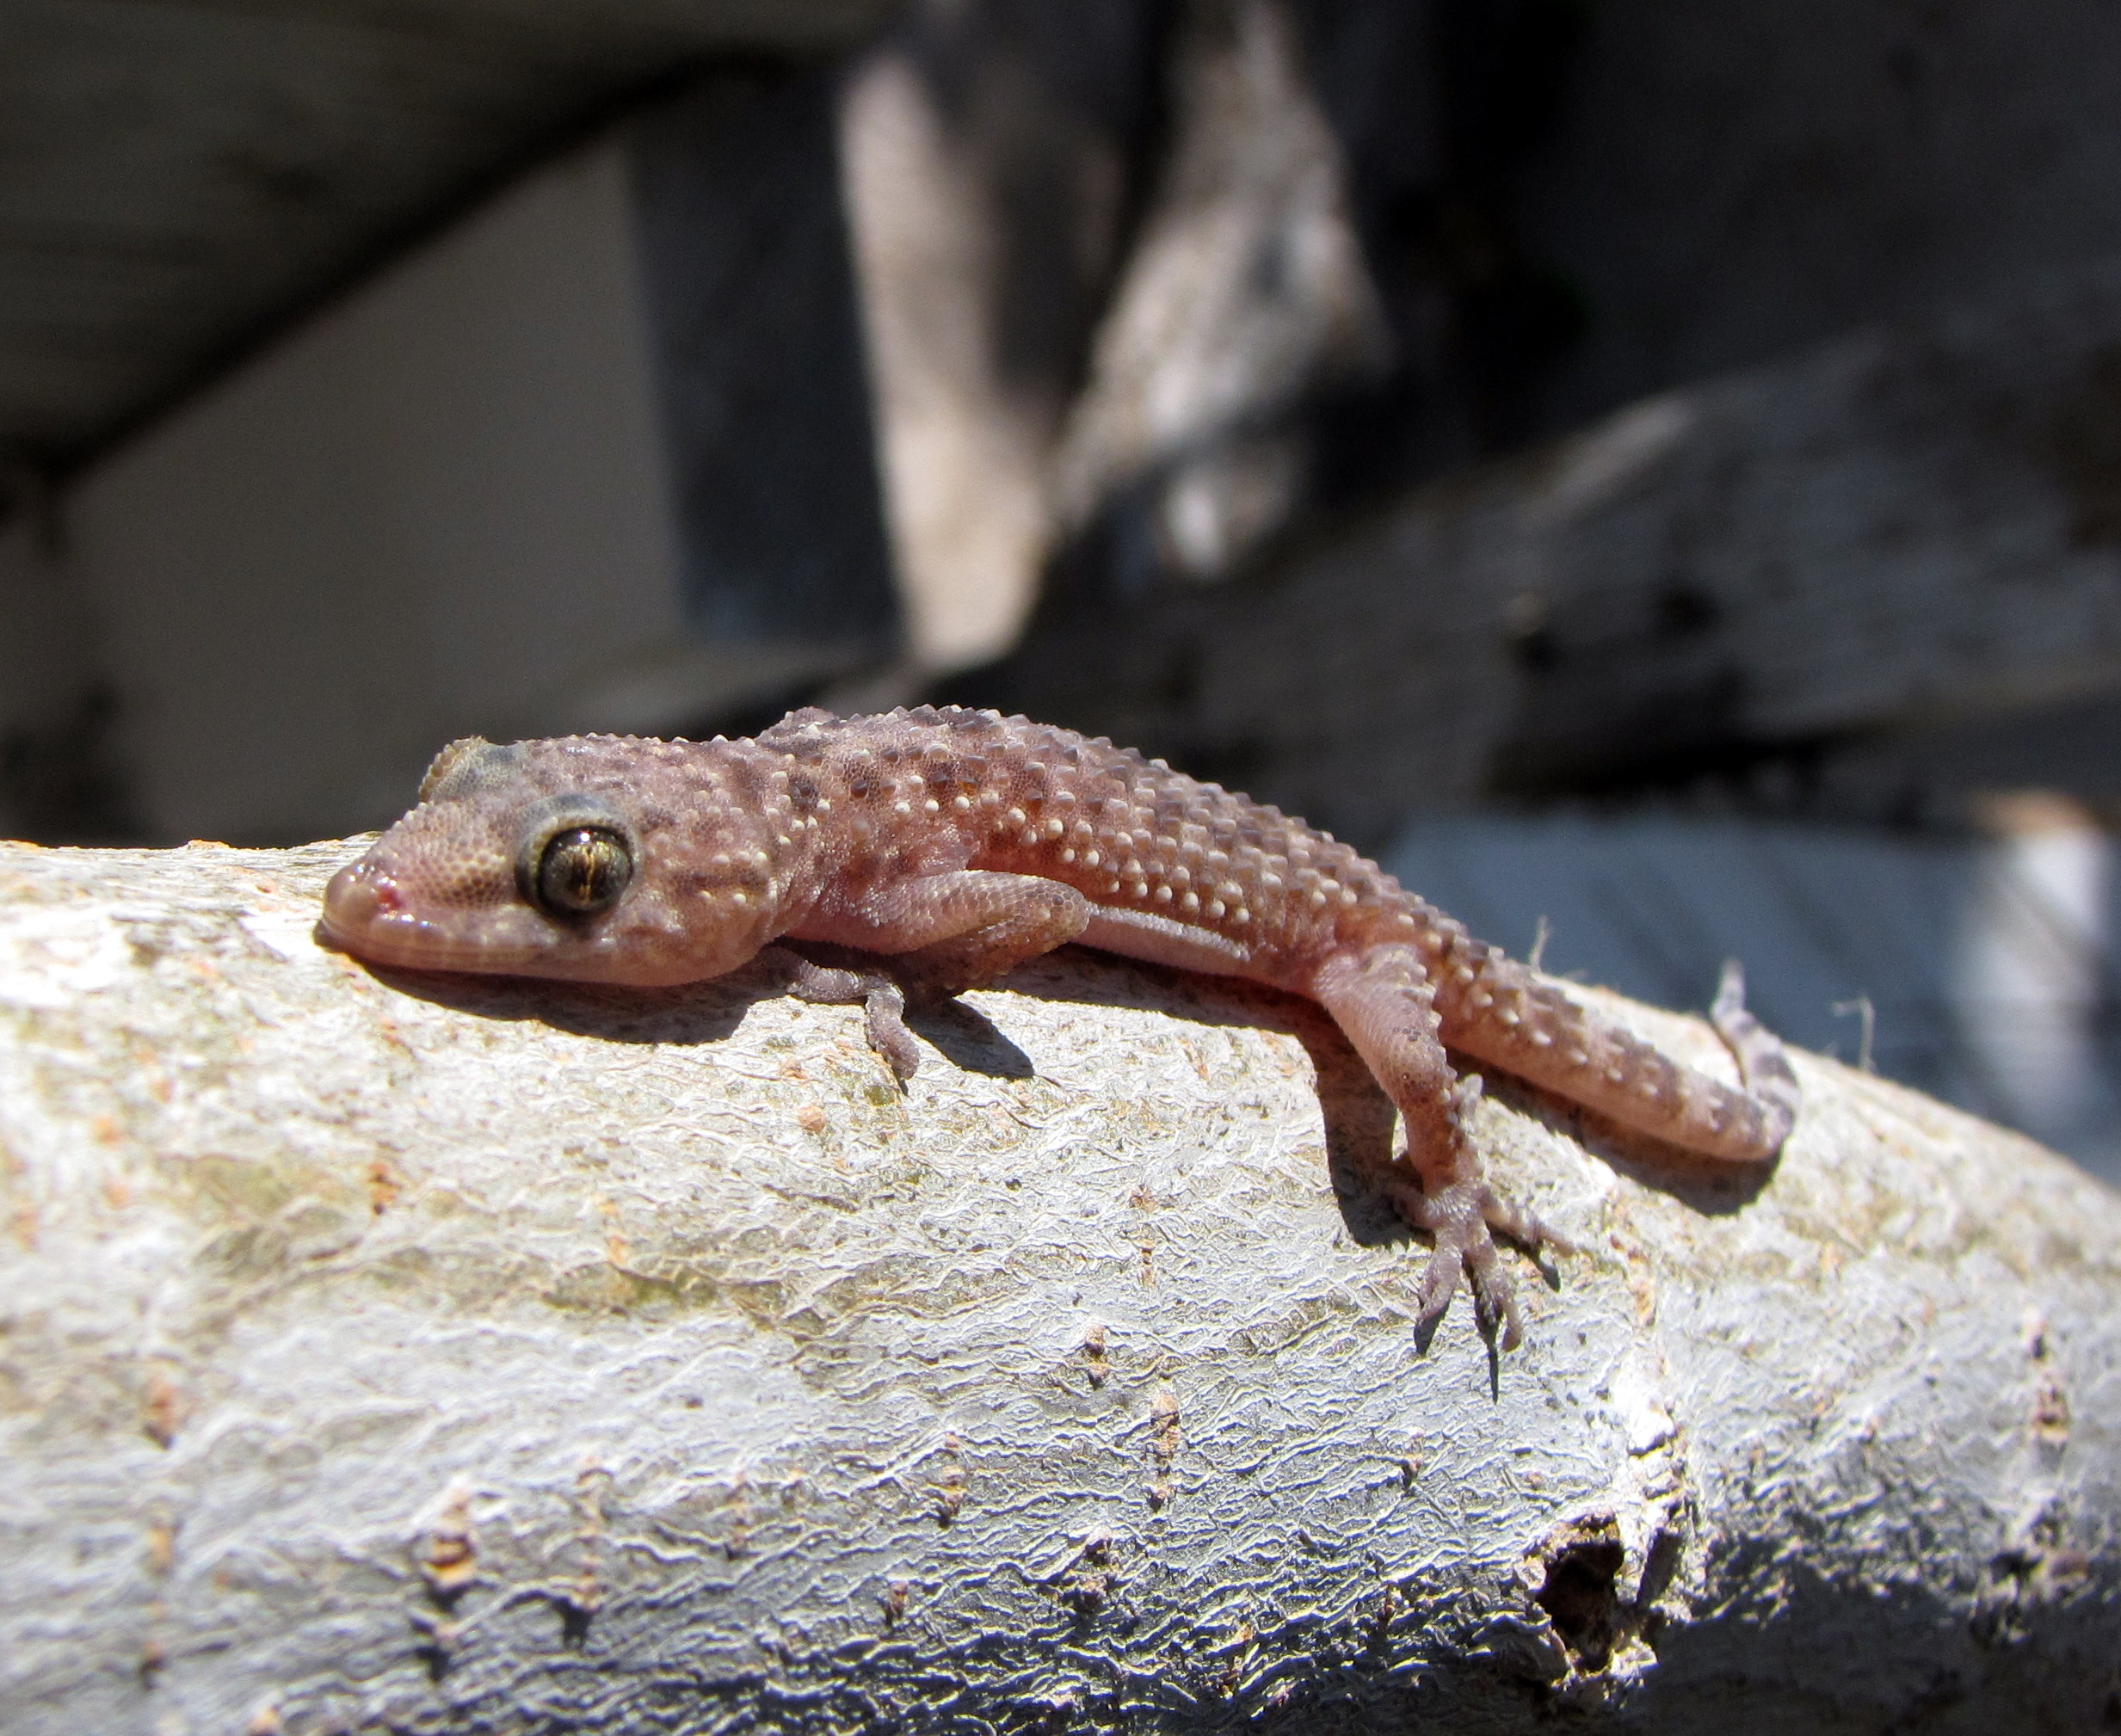 File:Mediterranean house gecko.JPG - Wikimedia Commons